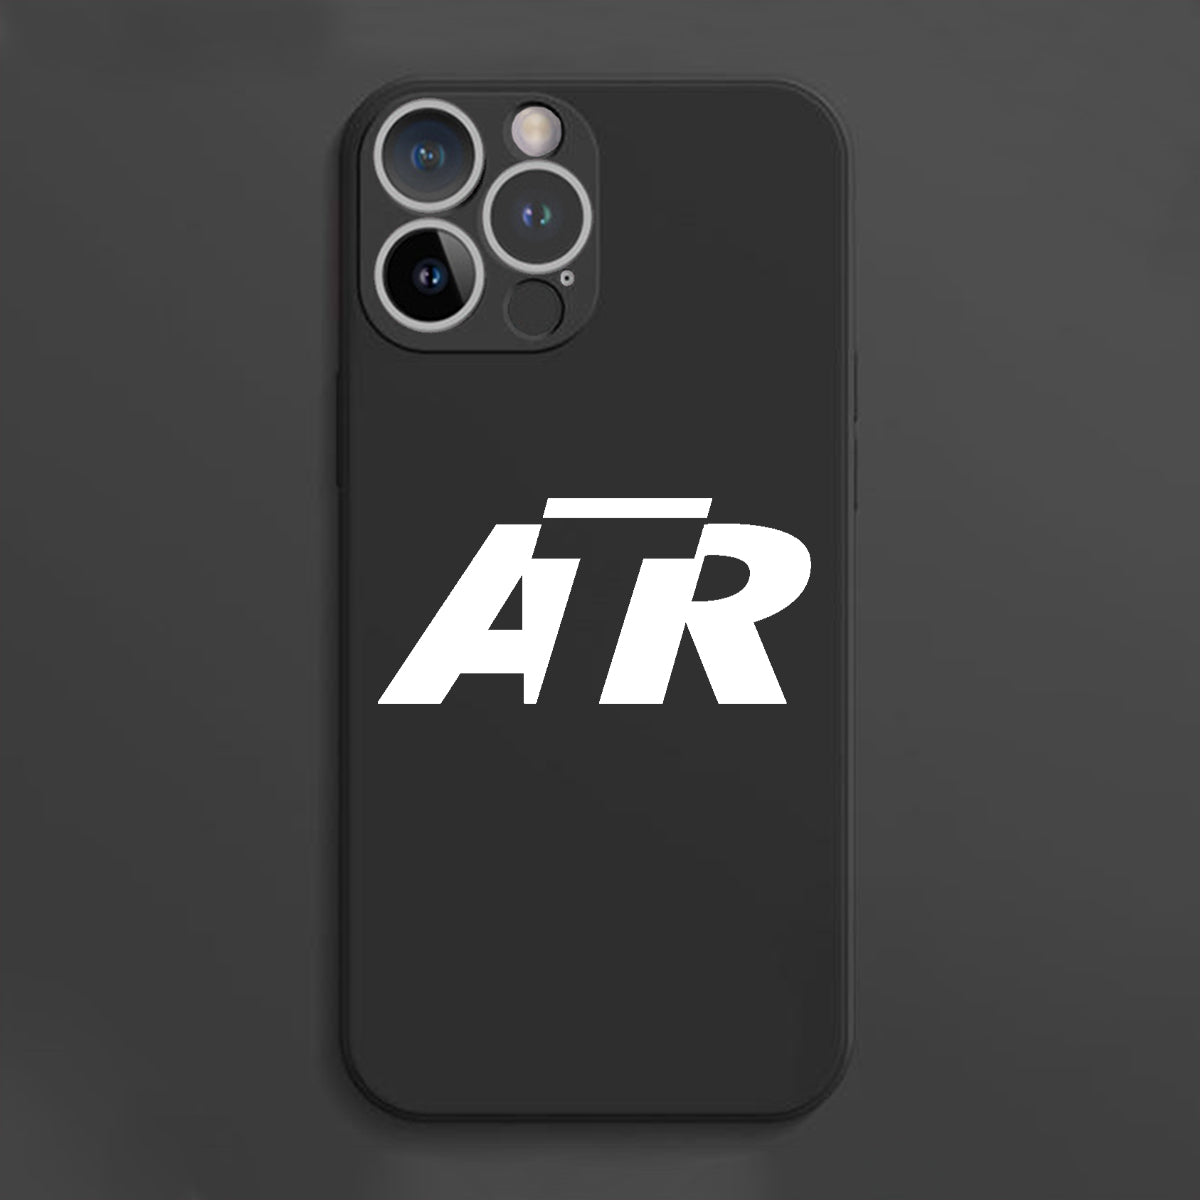 ATR & Text Designed Soft Silicone iPhone Cases